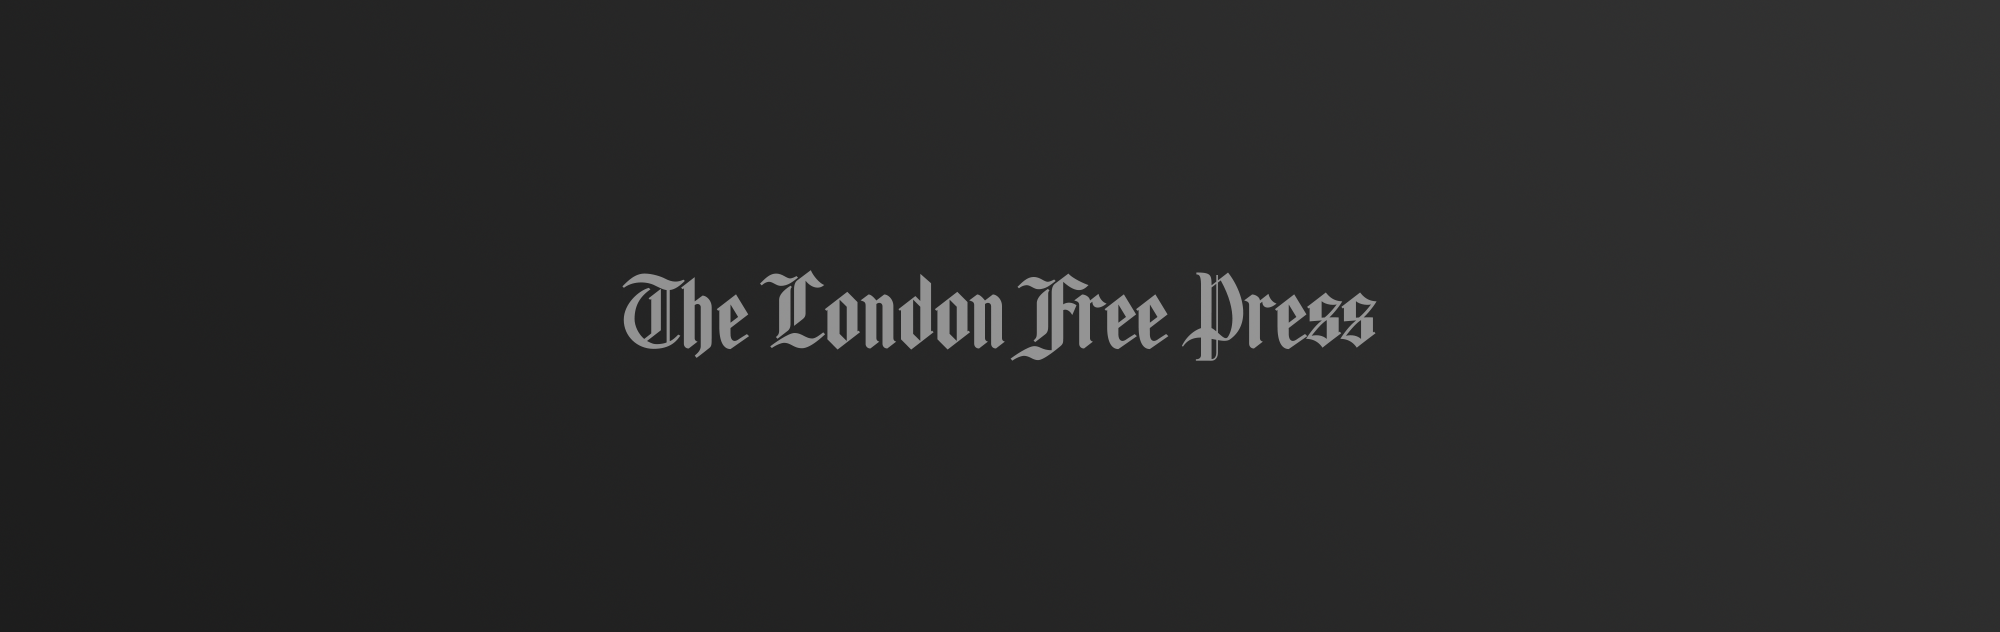 The London Free Press logo on dark gradient background